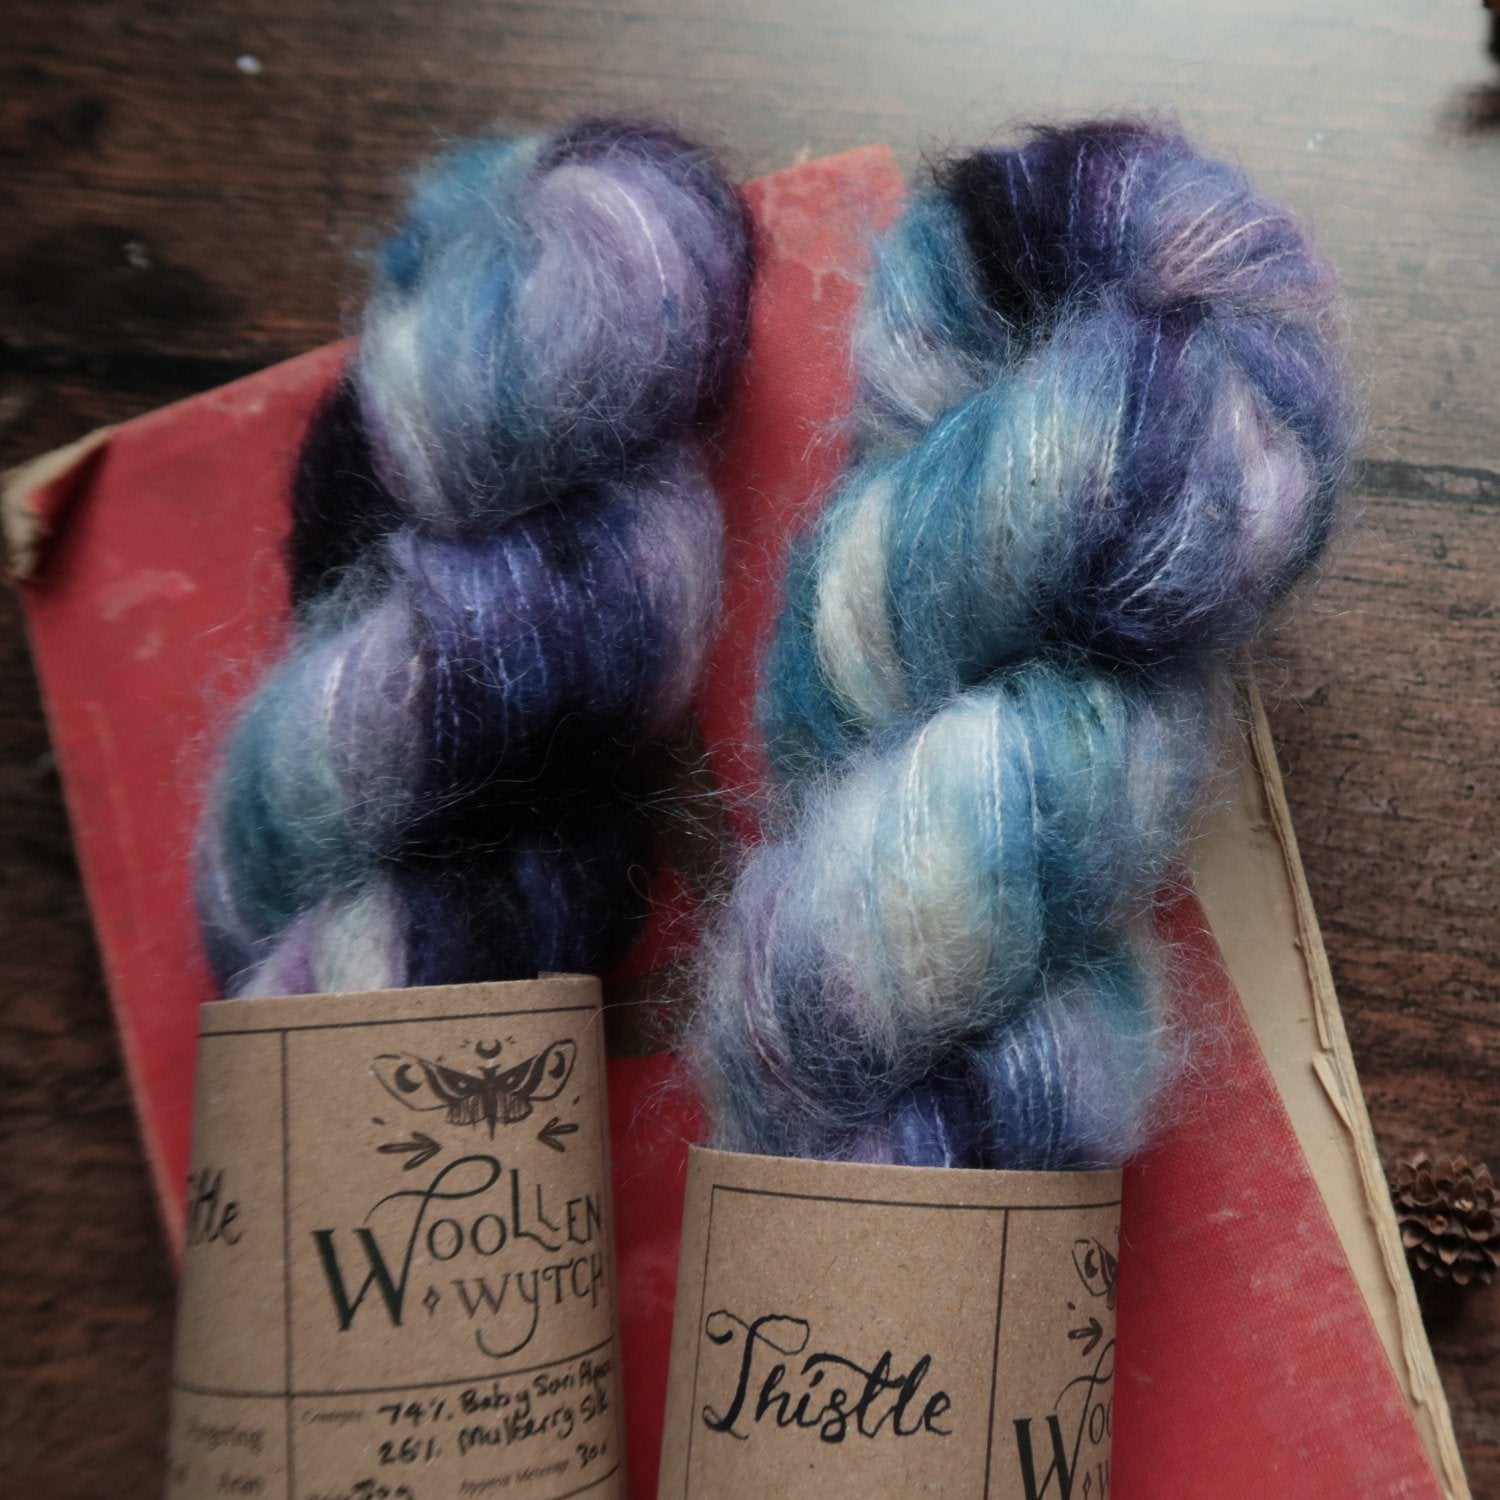 Thistle - Suri Cloud Yarn Woollen Wytch 